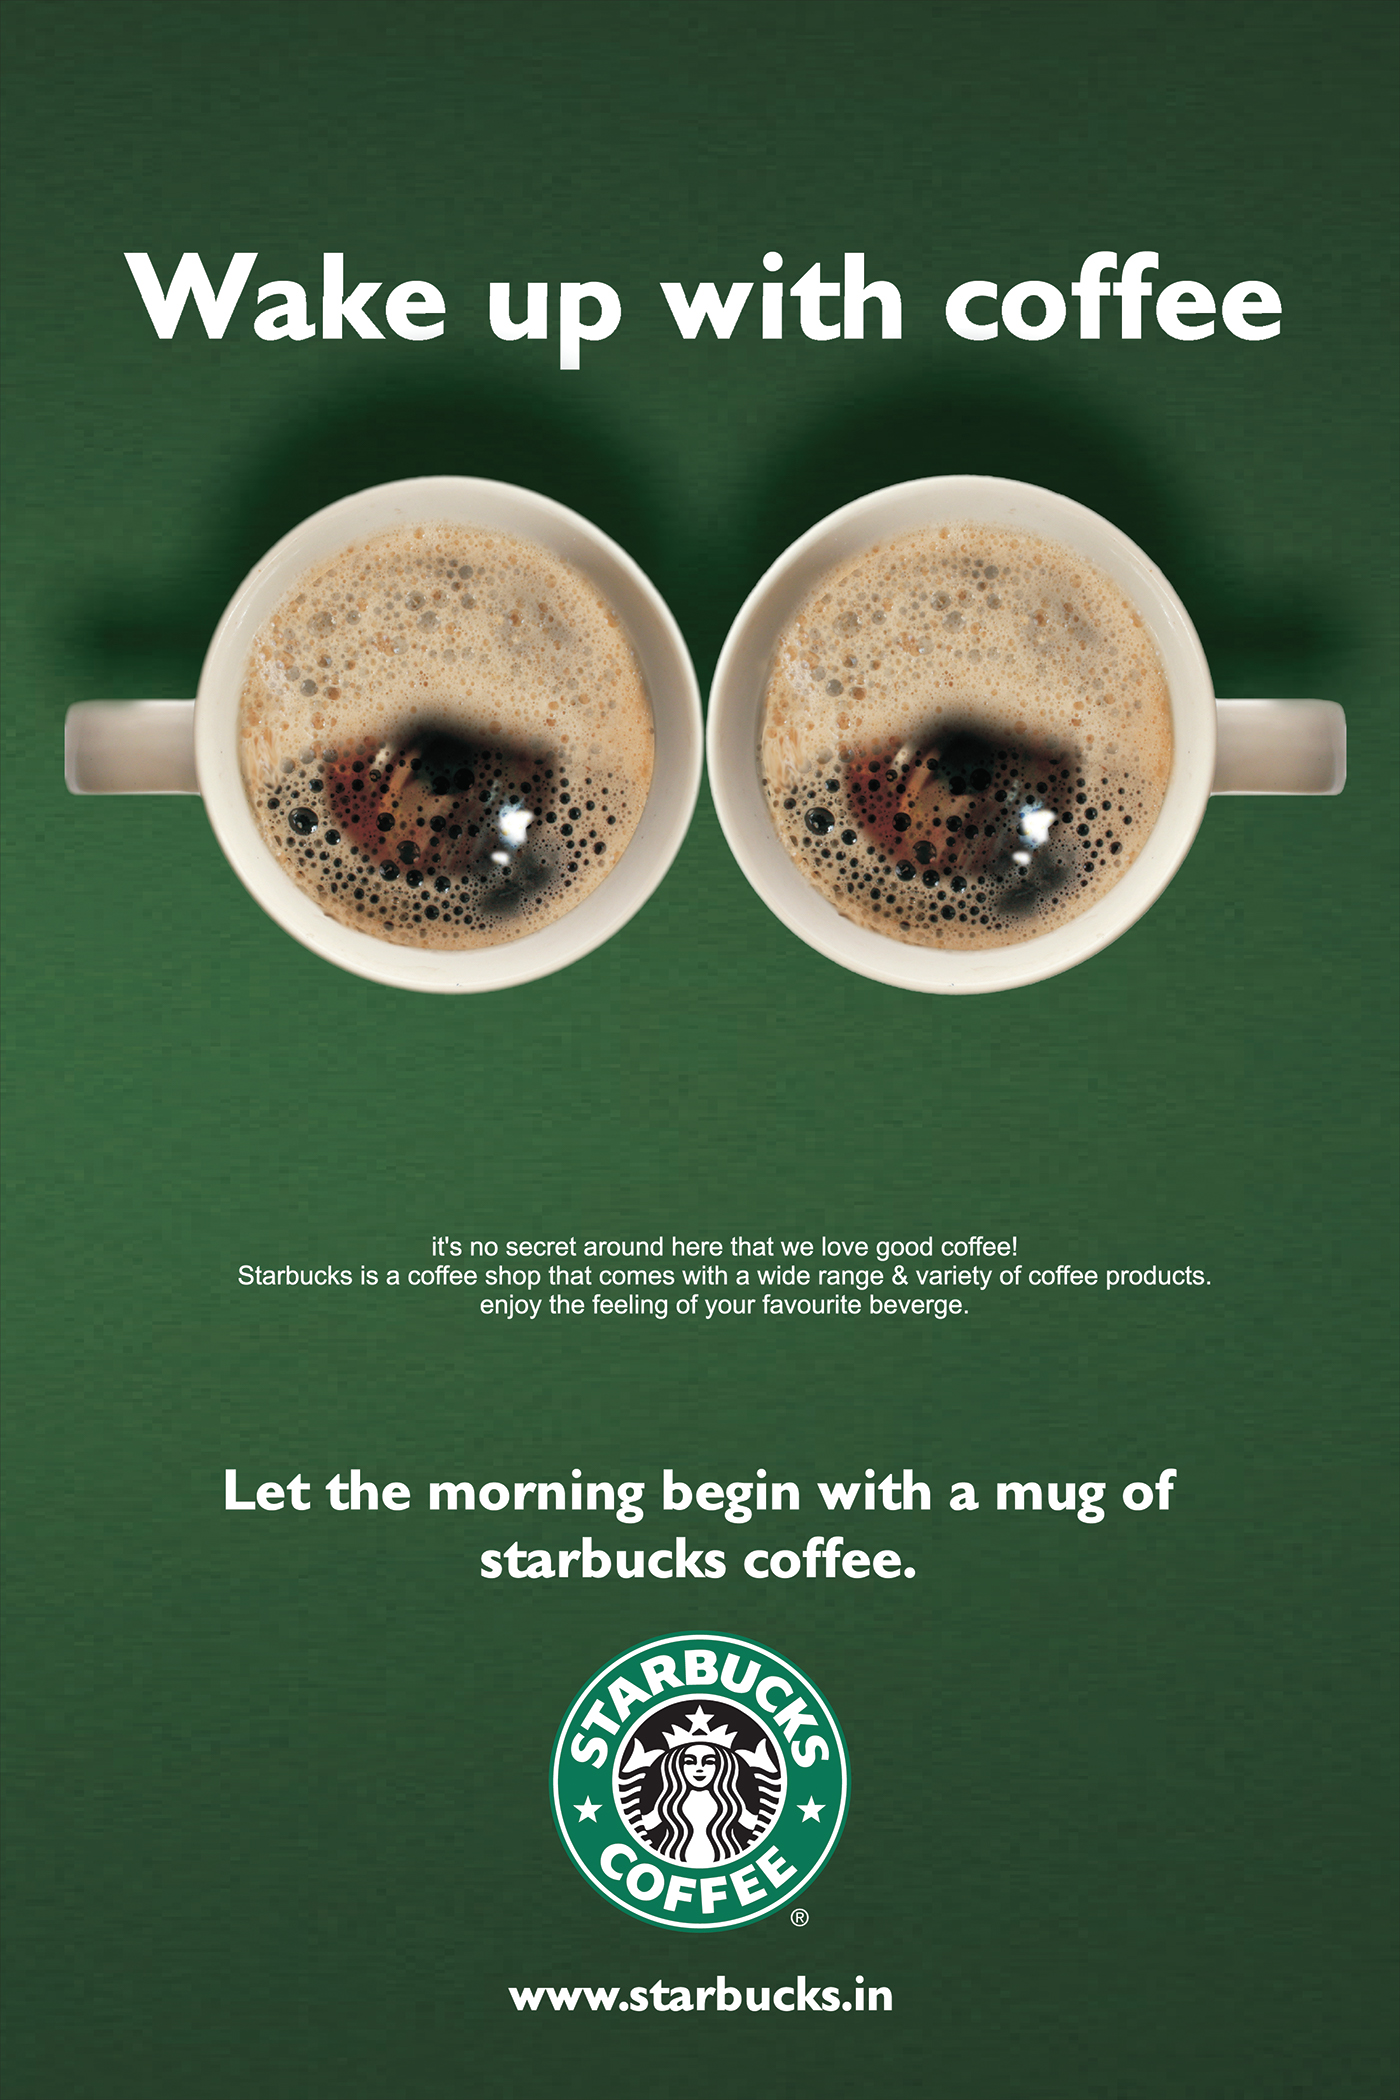 Starbucks Coffee (Campaign Advertising) on Behance